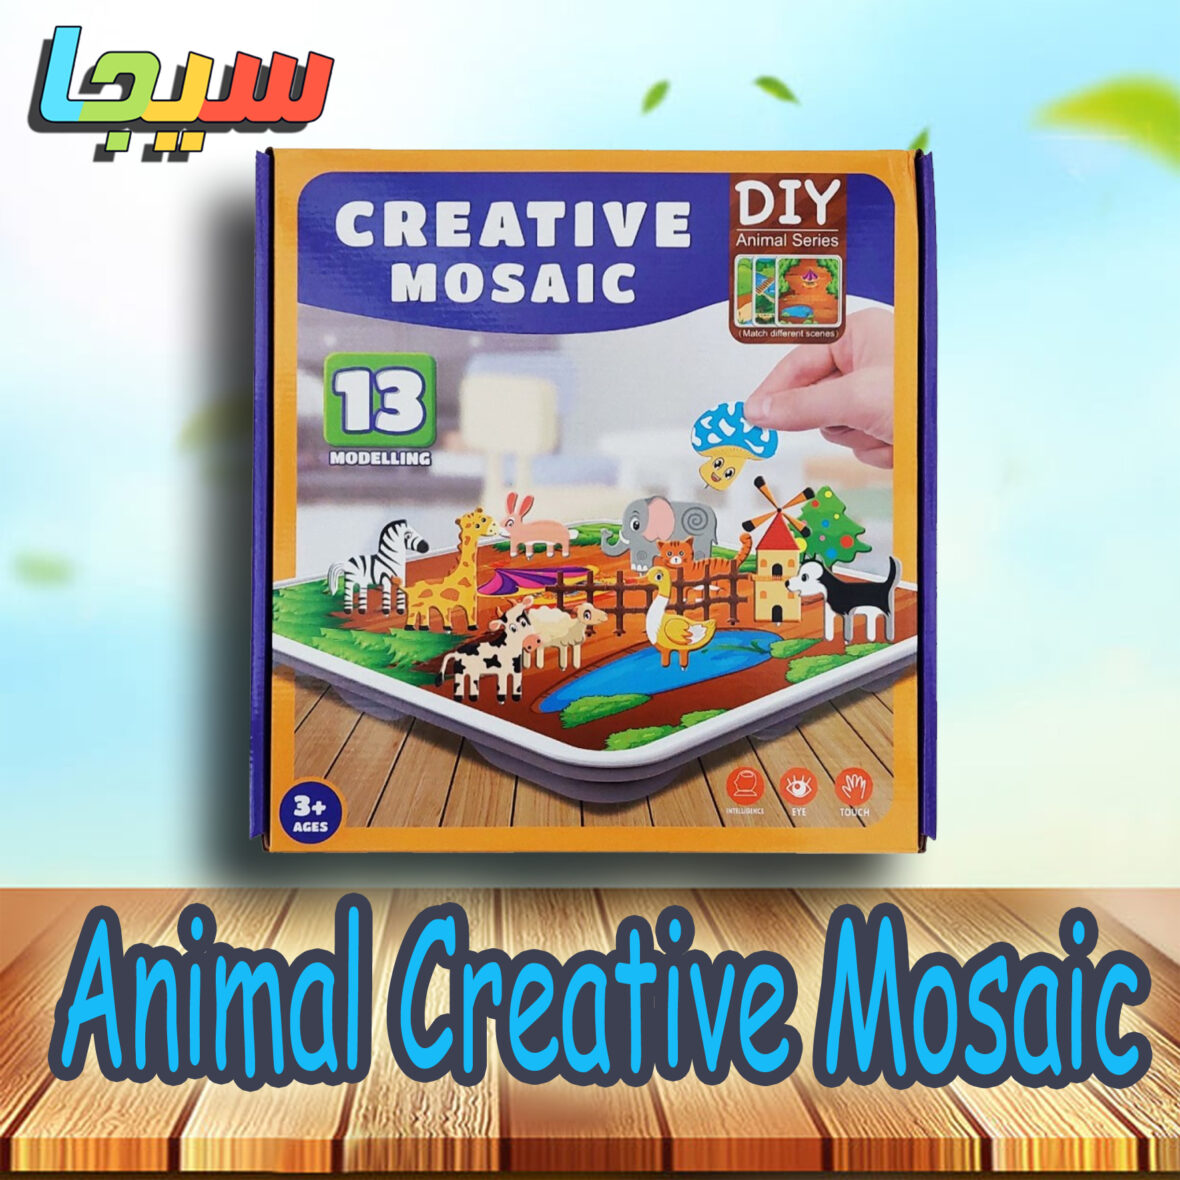 Animal Creative Mosaic